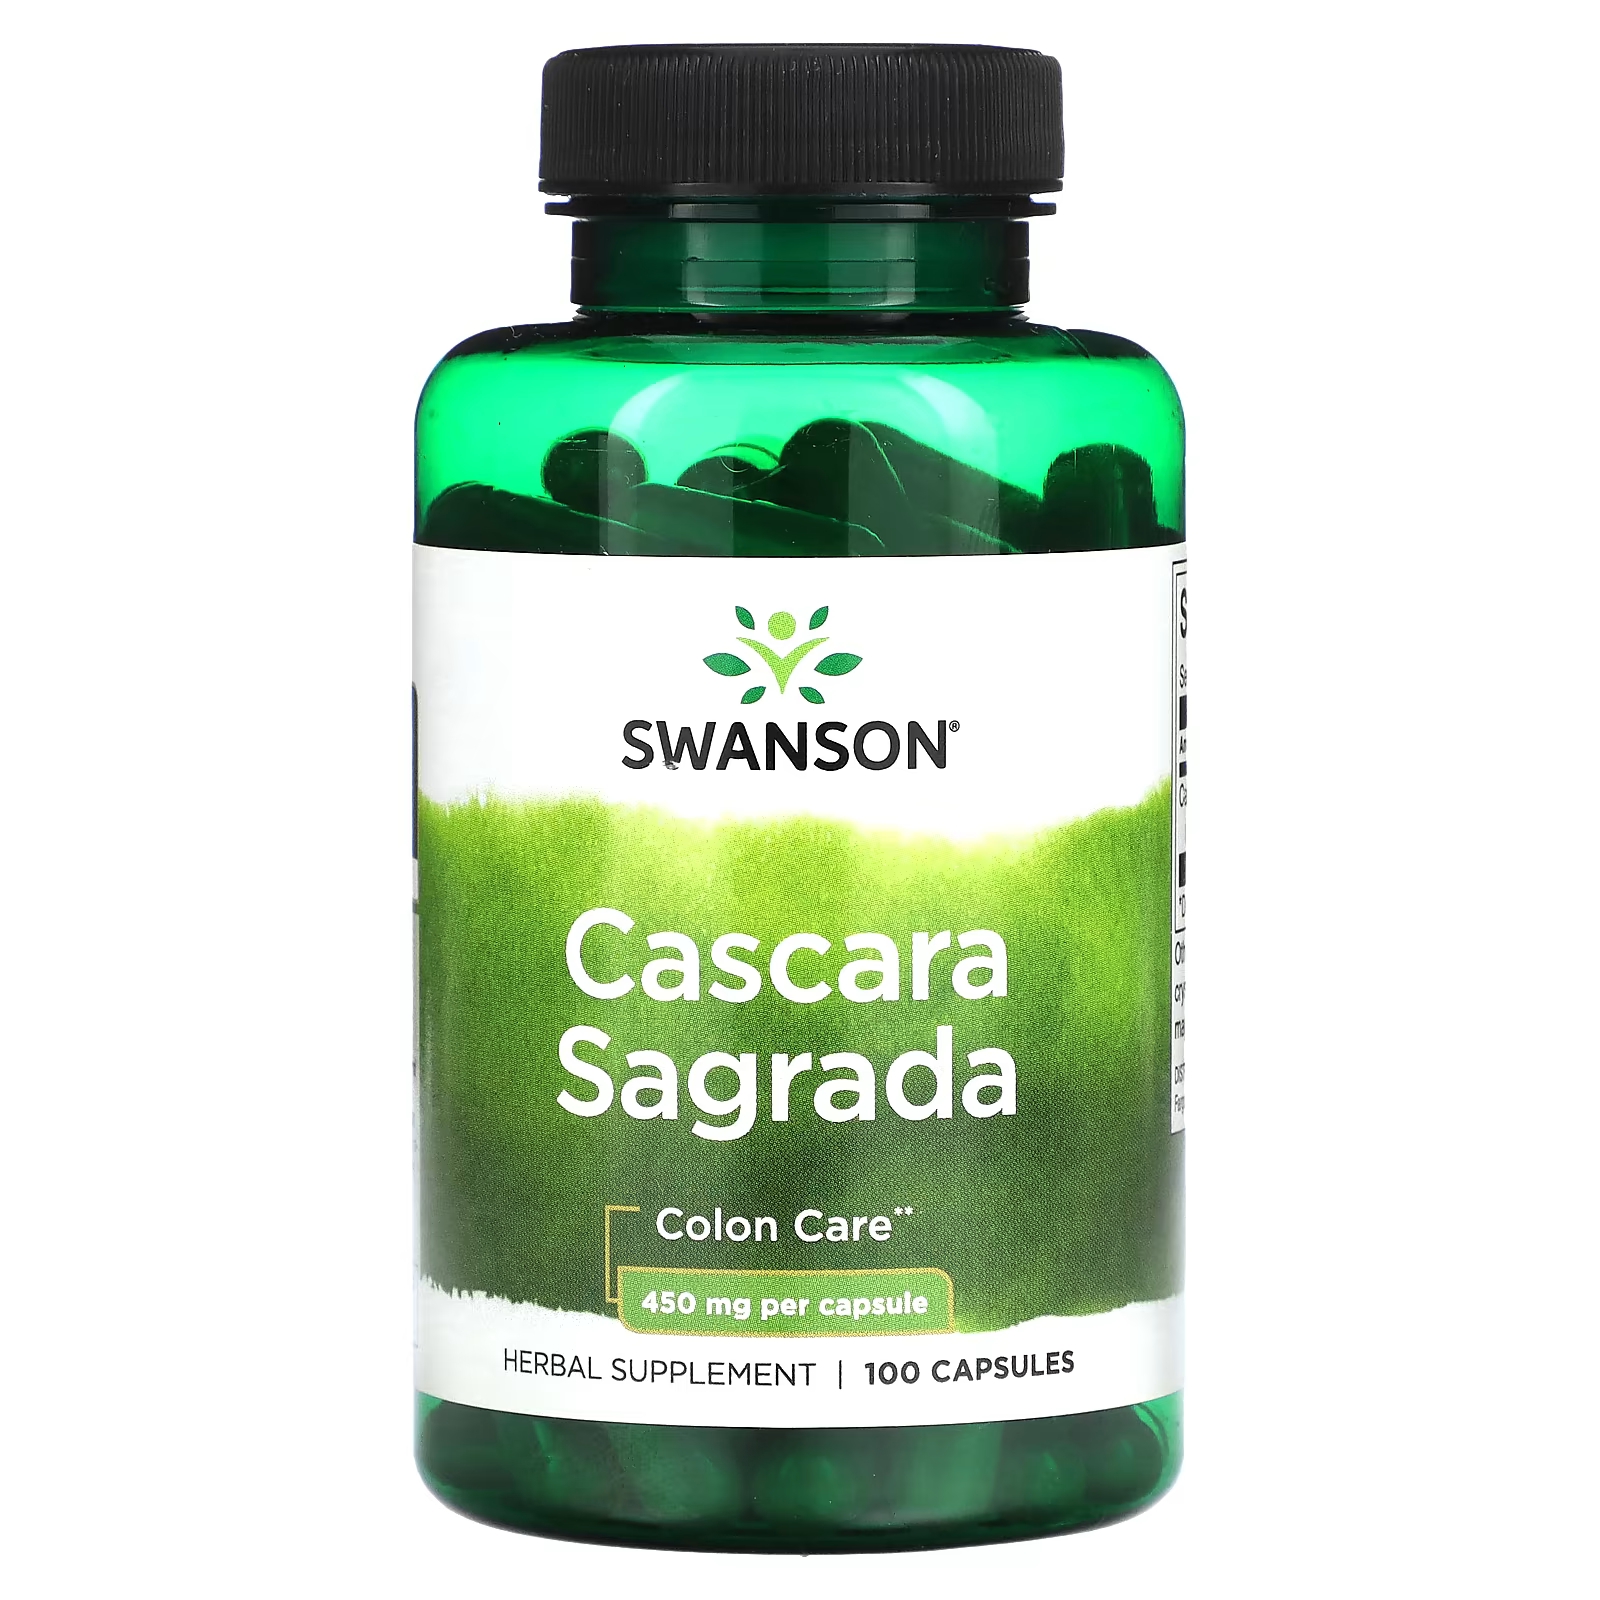 Каскара саграда Swanson 450 мг, 100 капсул сырые пробиотики уход за толстой кишкой 30 капсул garden of life